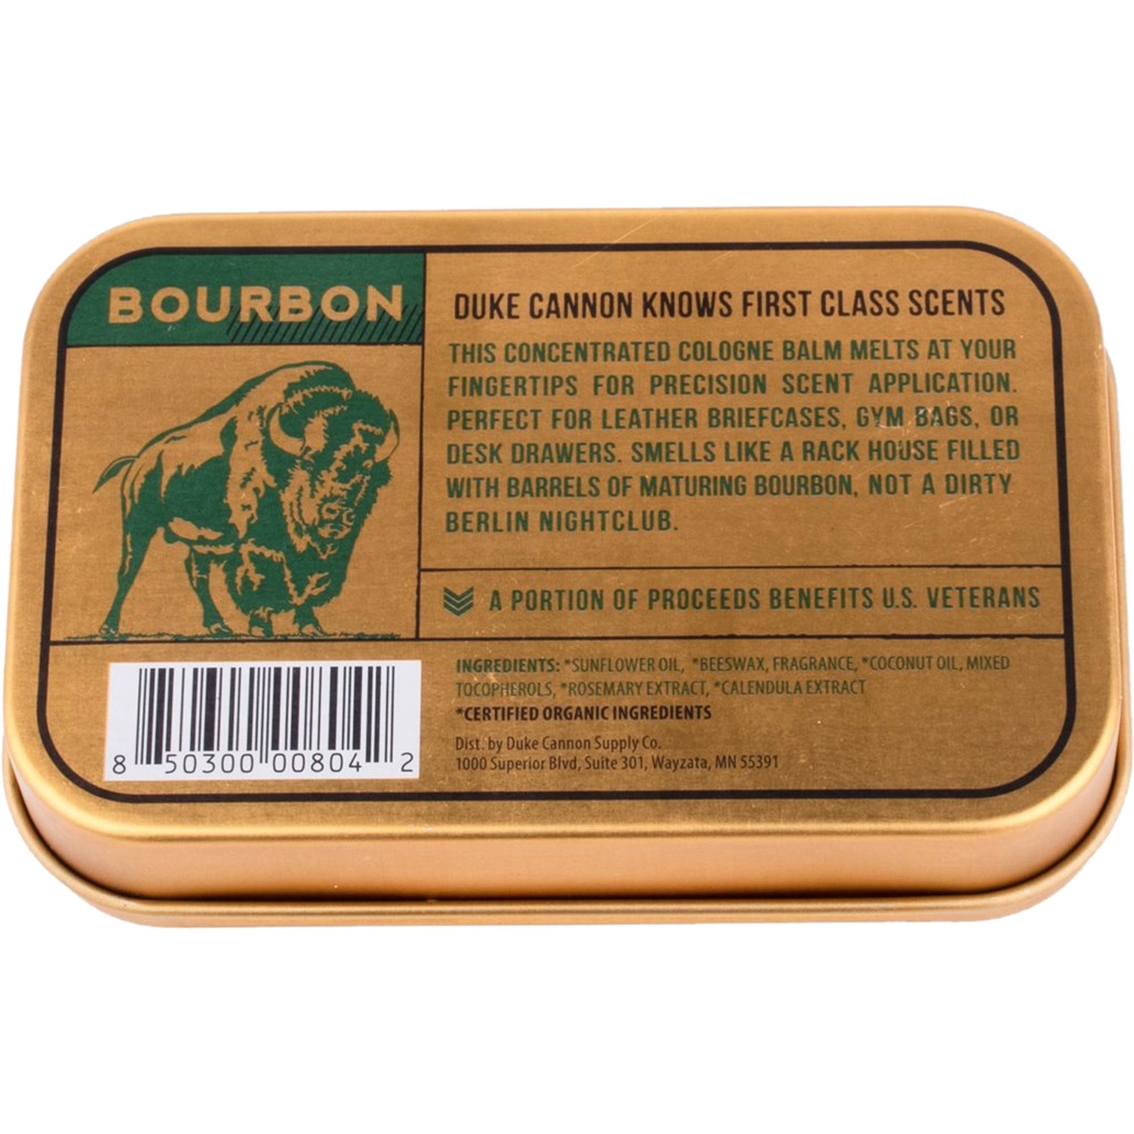 Duke Cannon Bourbon Solid Cologne Balm - Image 2 of 4